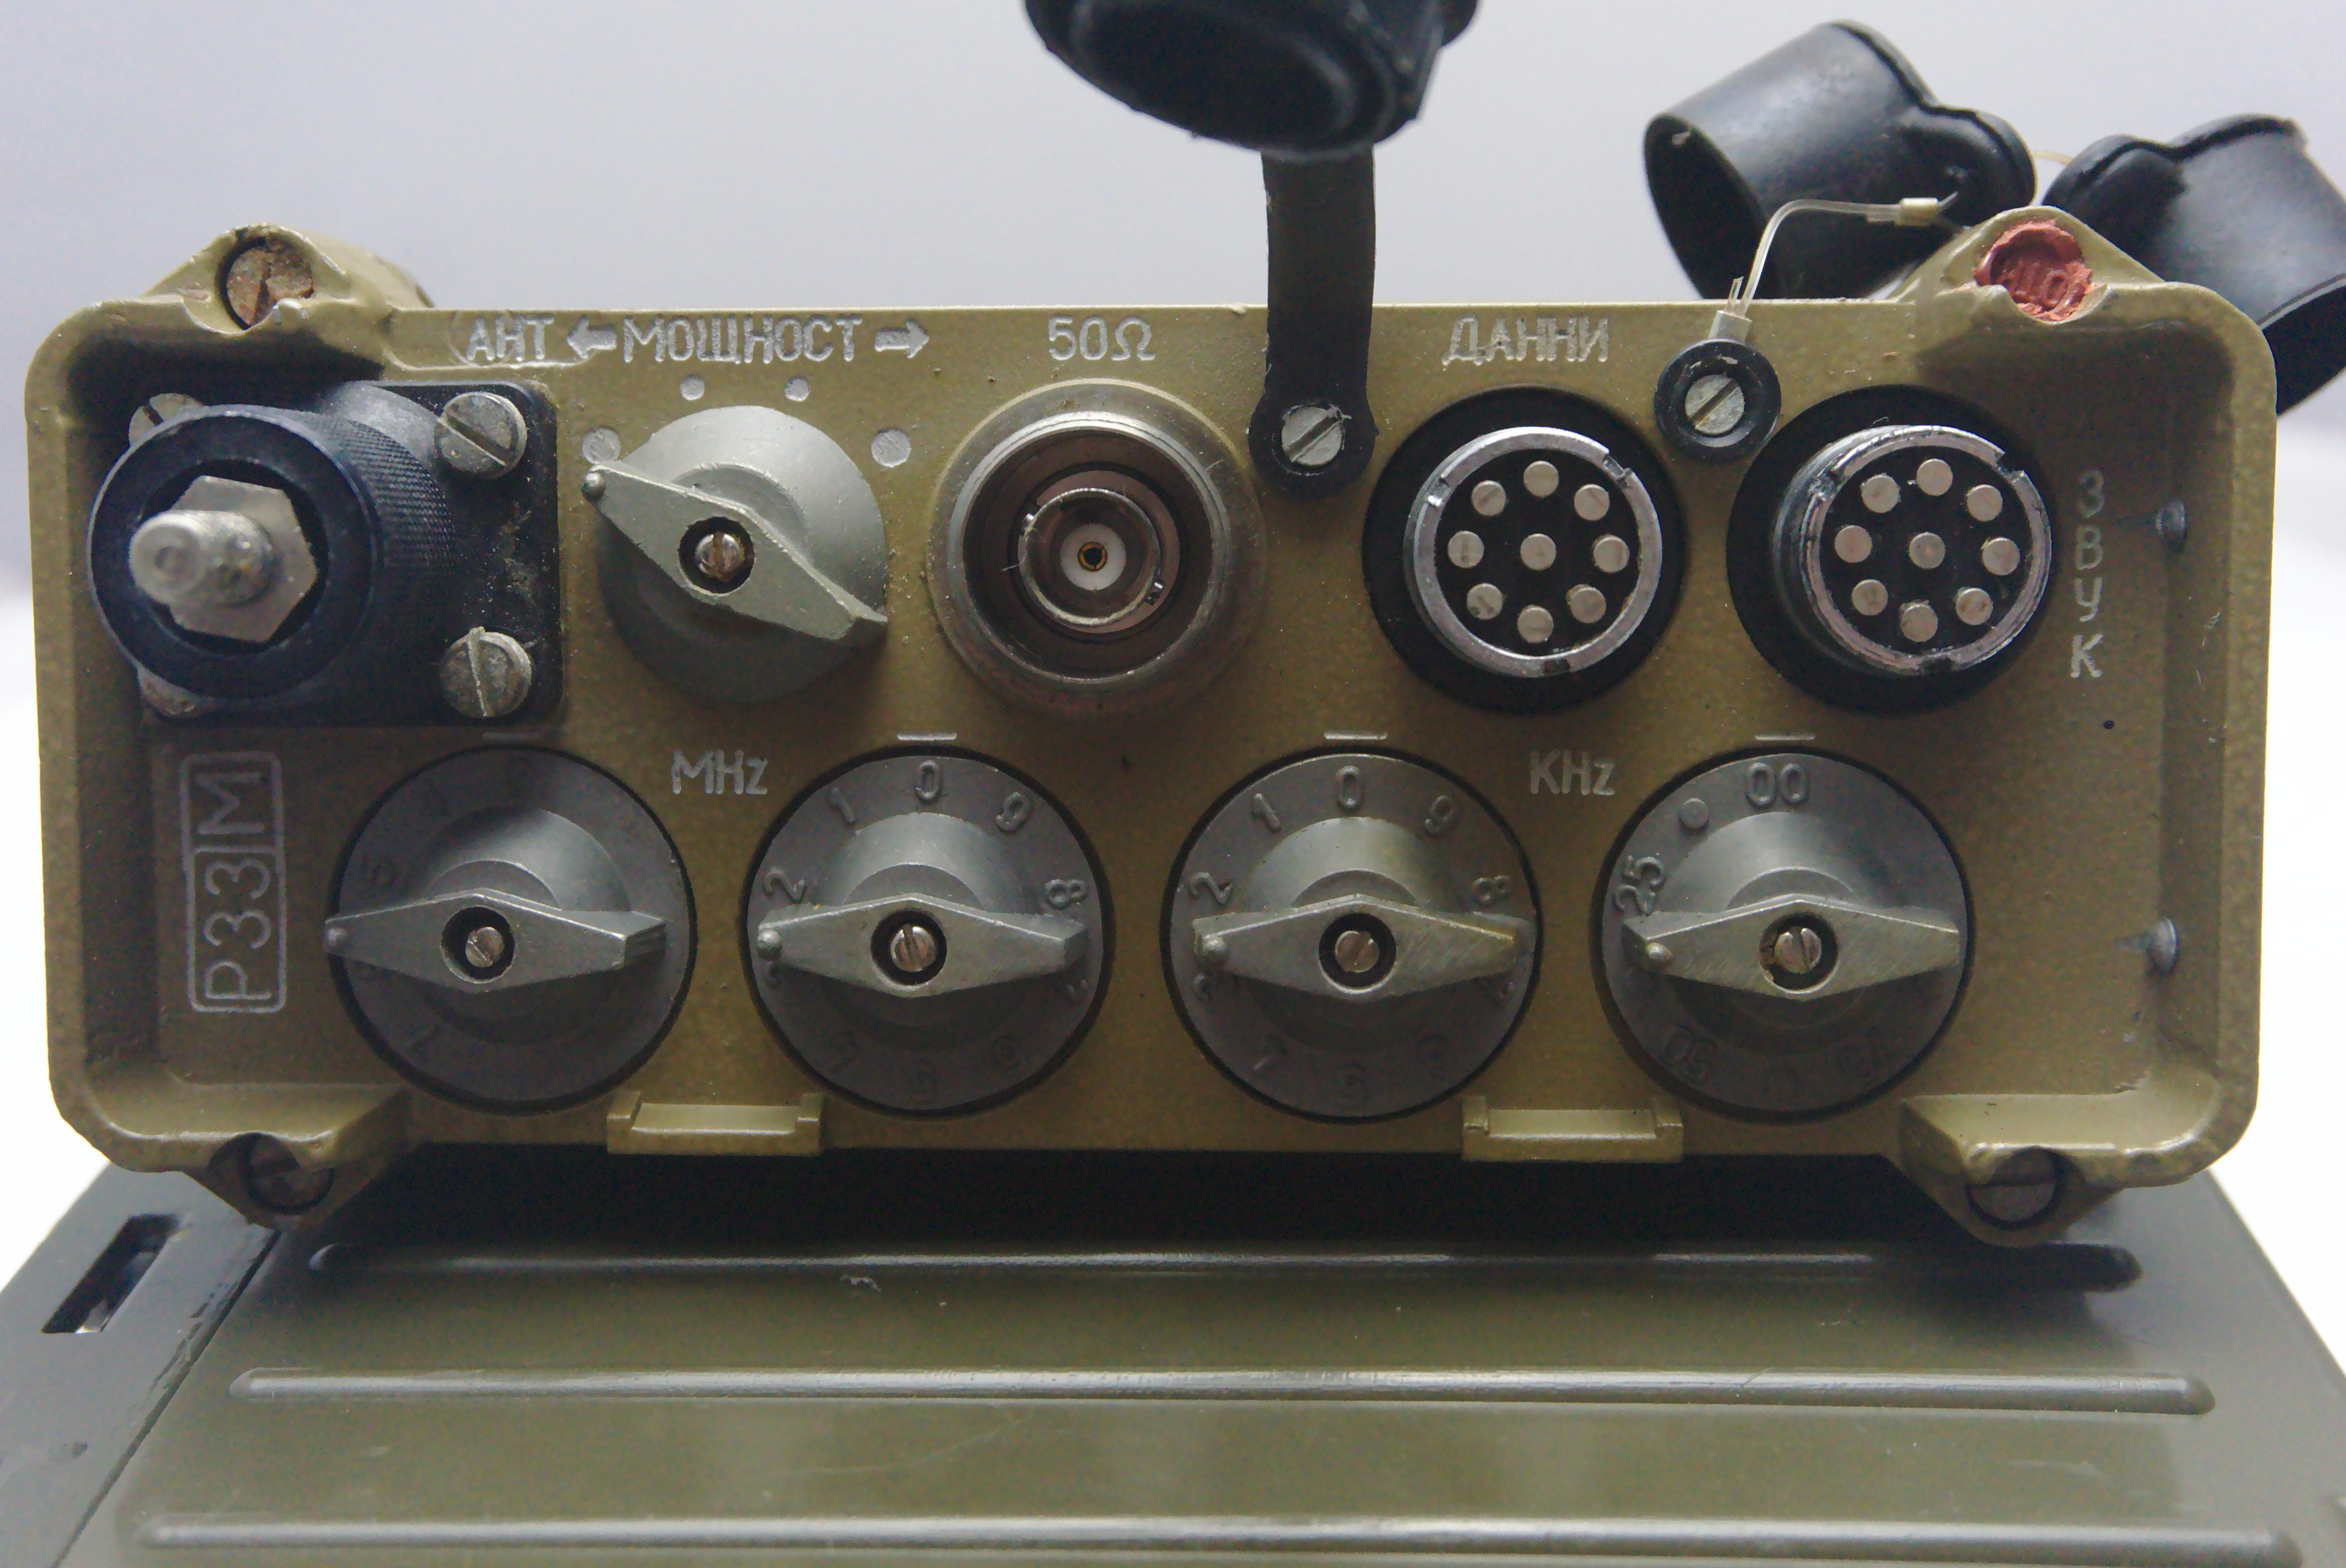 R-33 M VHF TRX, 30-79.9MHz, FM.